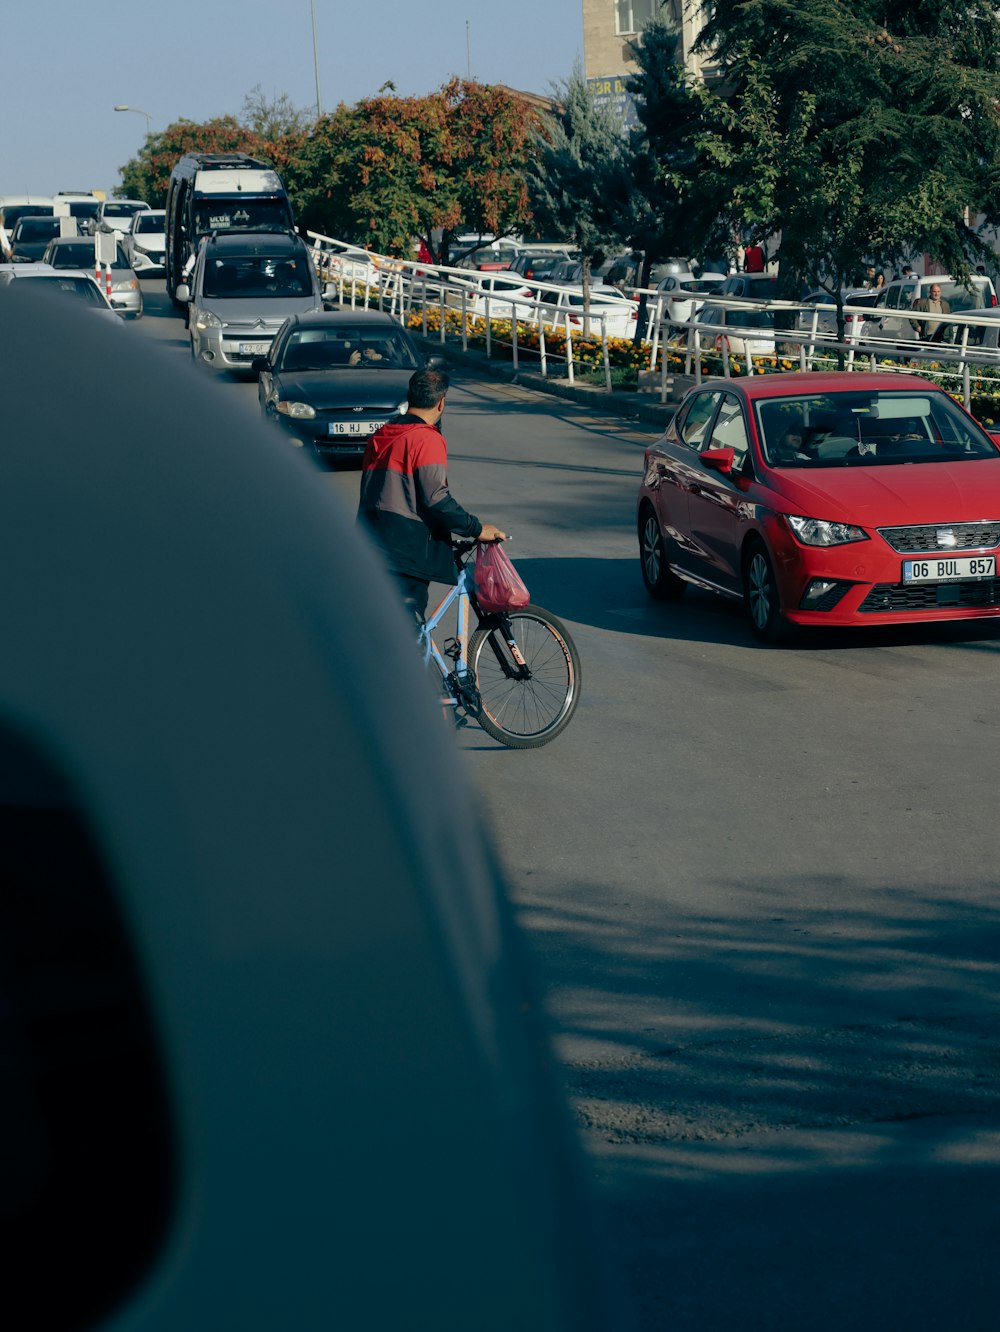 a man riding a bike down a street next to a red car